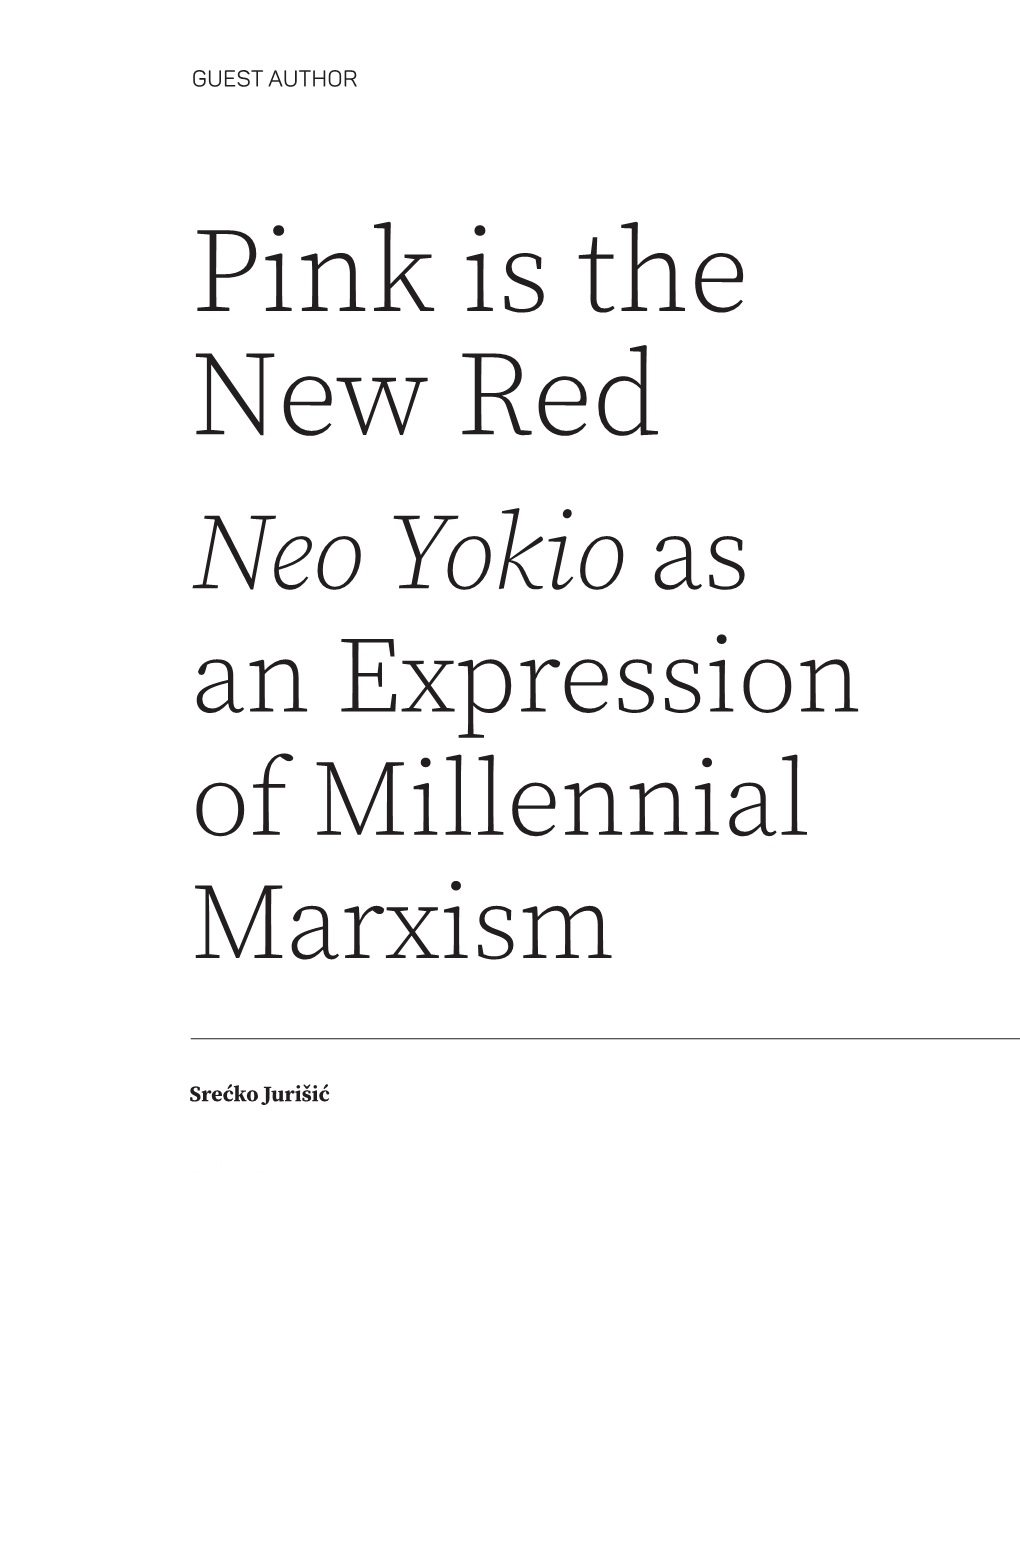 Neo Yokio As an Expression of Millennial Marxism